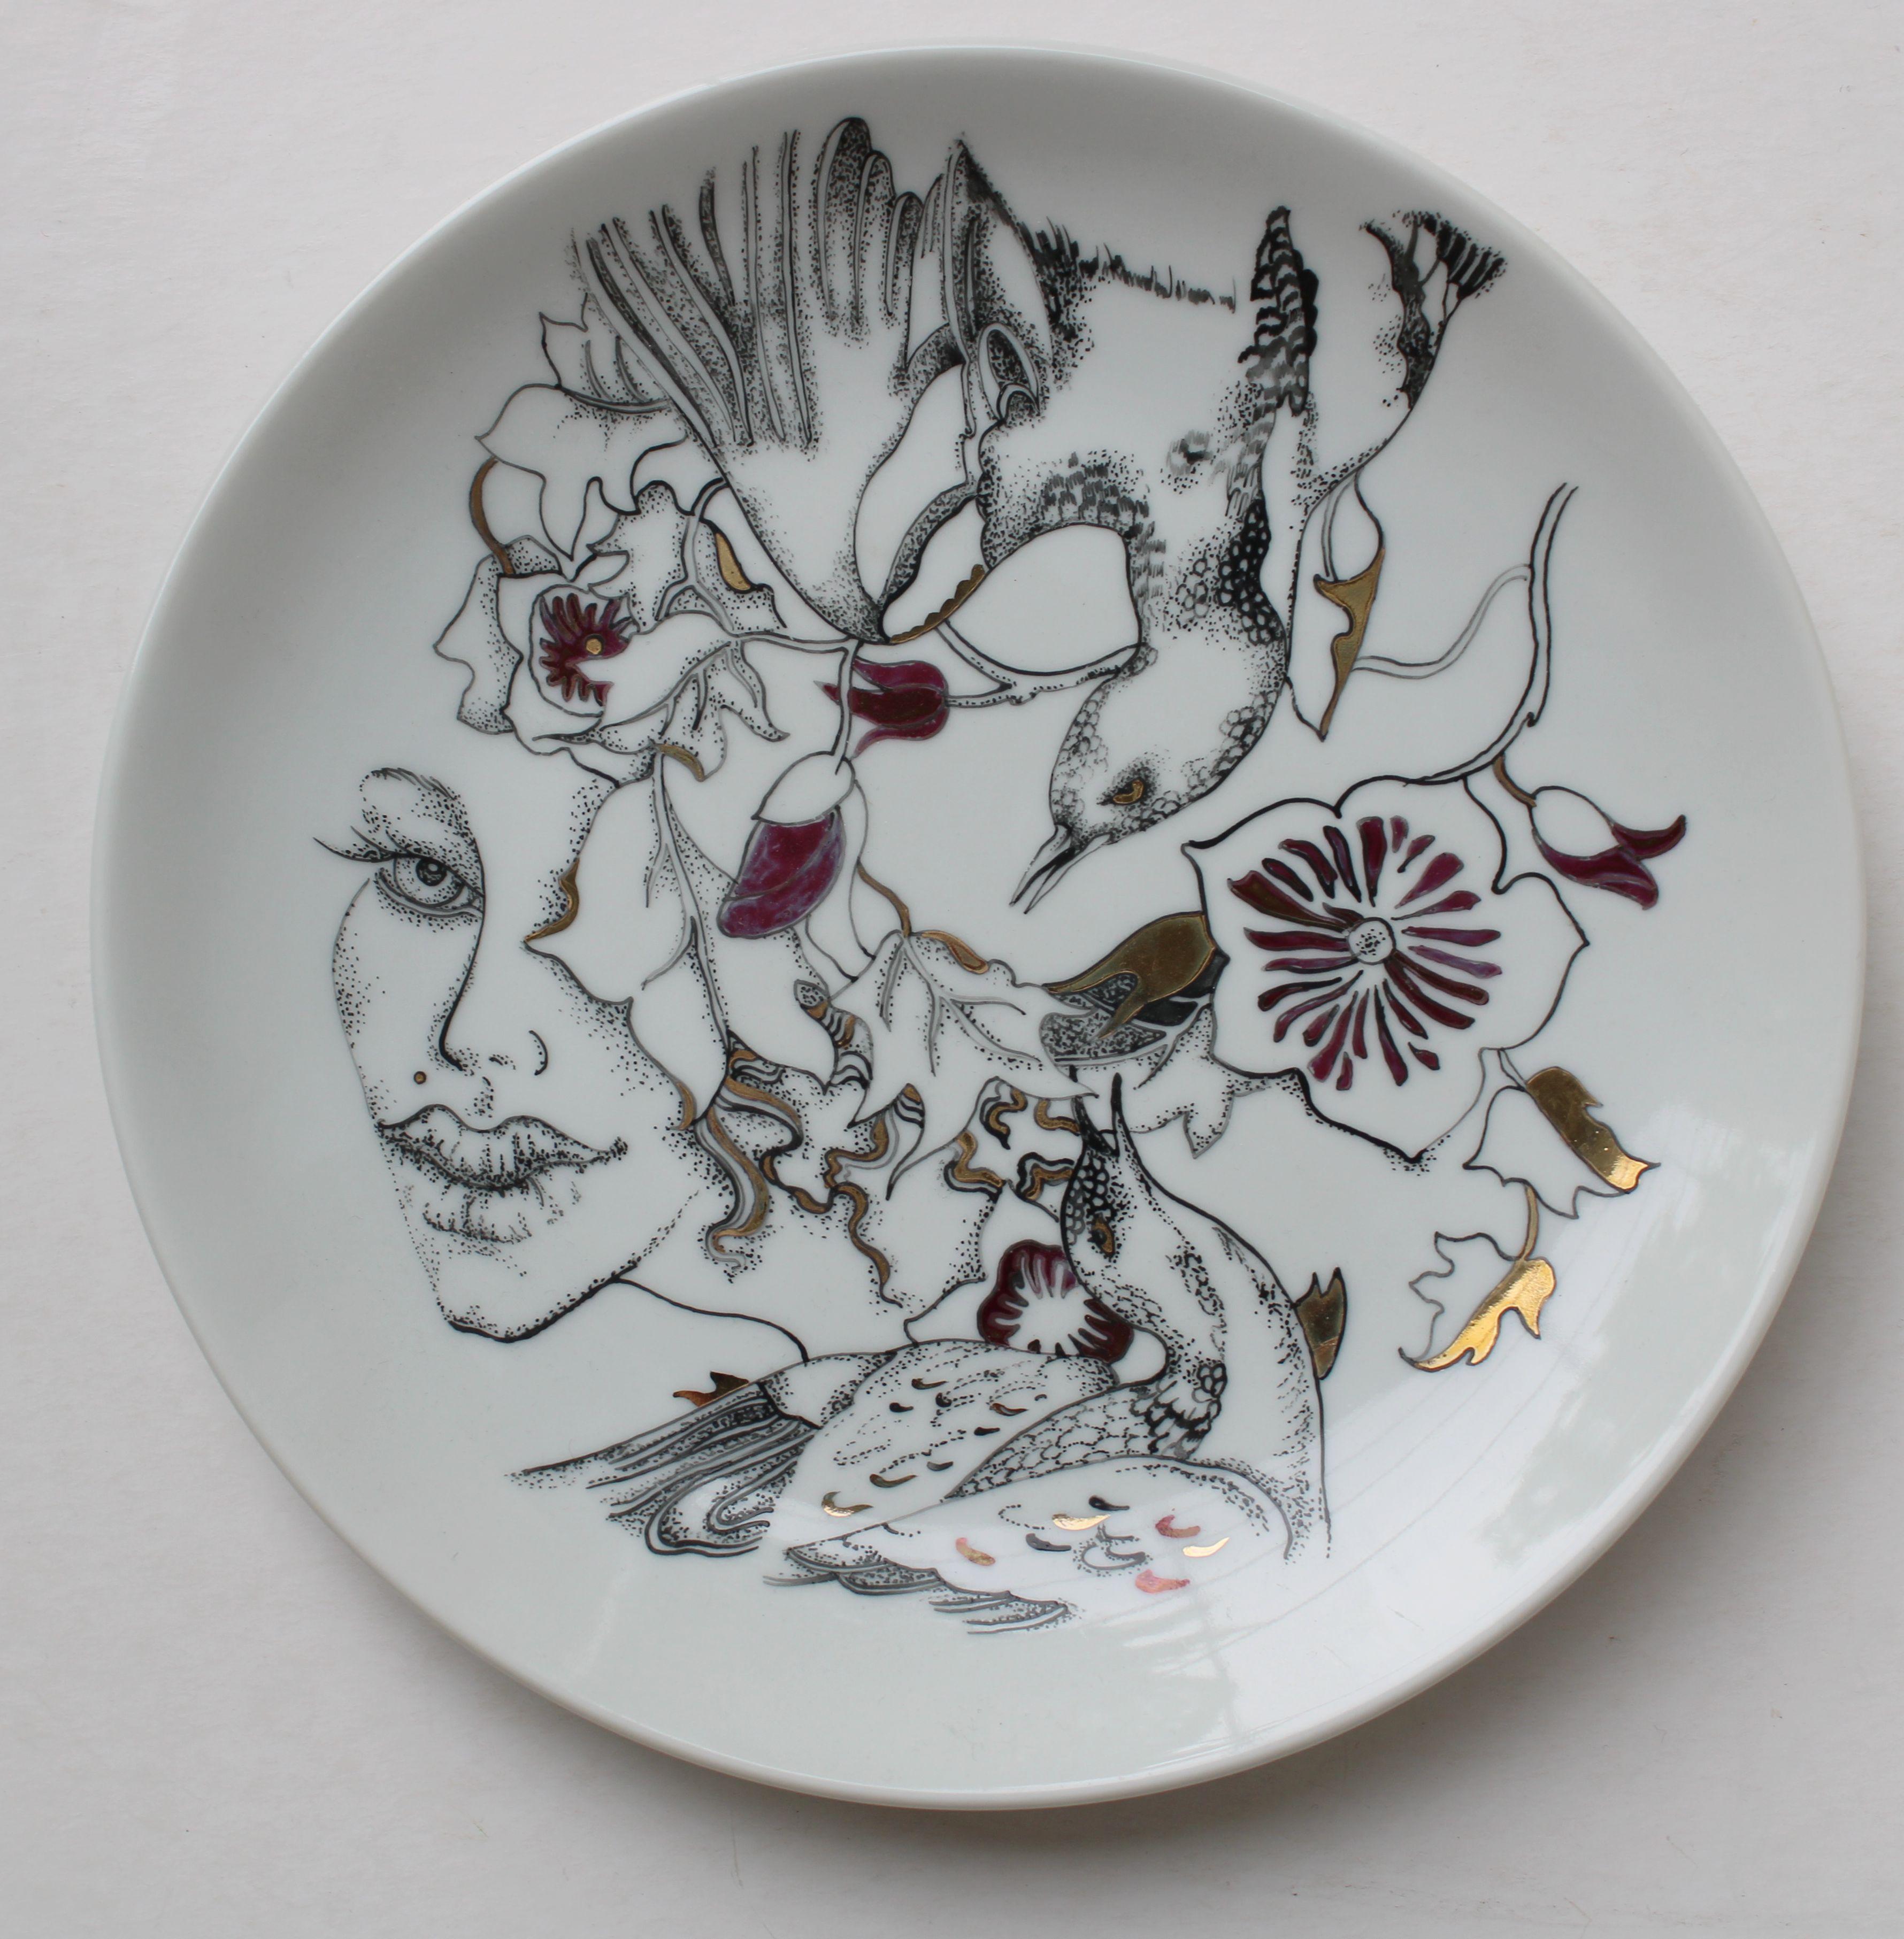 Vögel  Bemalte Porzellanplatte aus dem Jahr 2009, ca. 20,5 cm